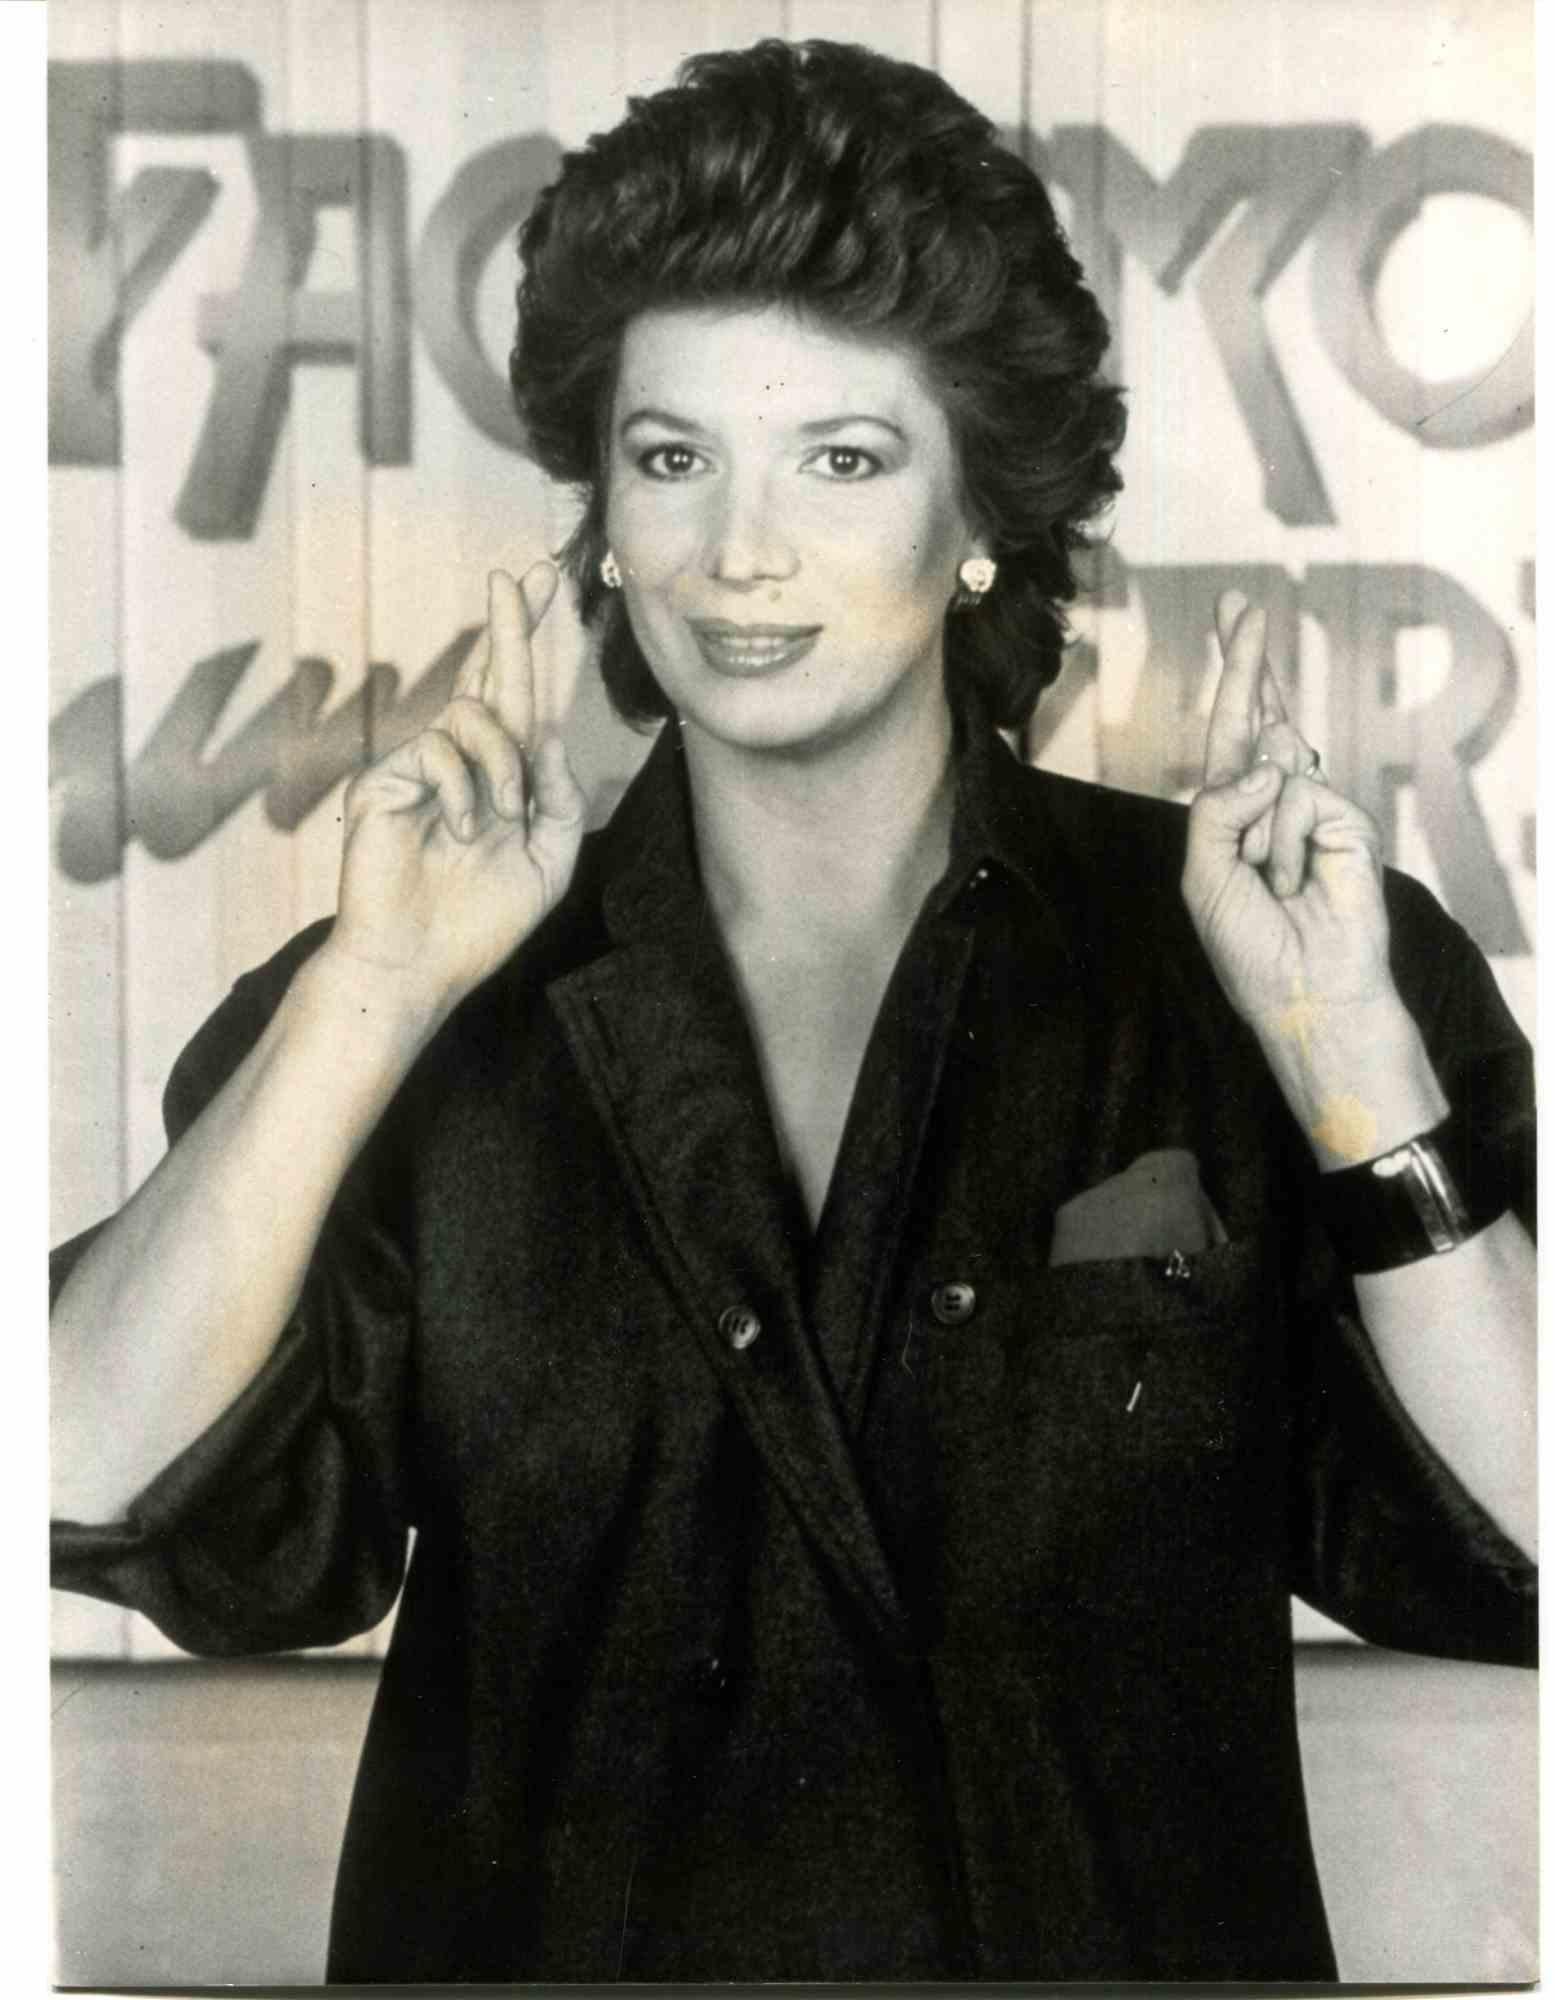 Unknown Figurative Photograph - Photo of Iva Zanicchi - 1980s